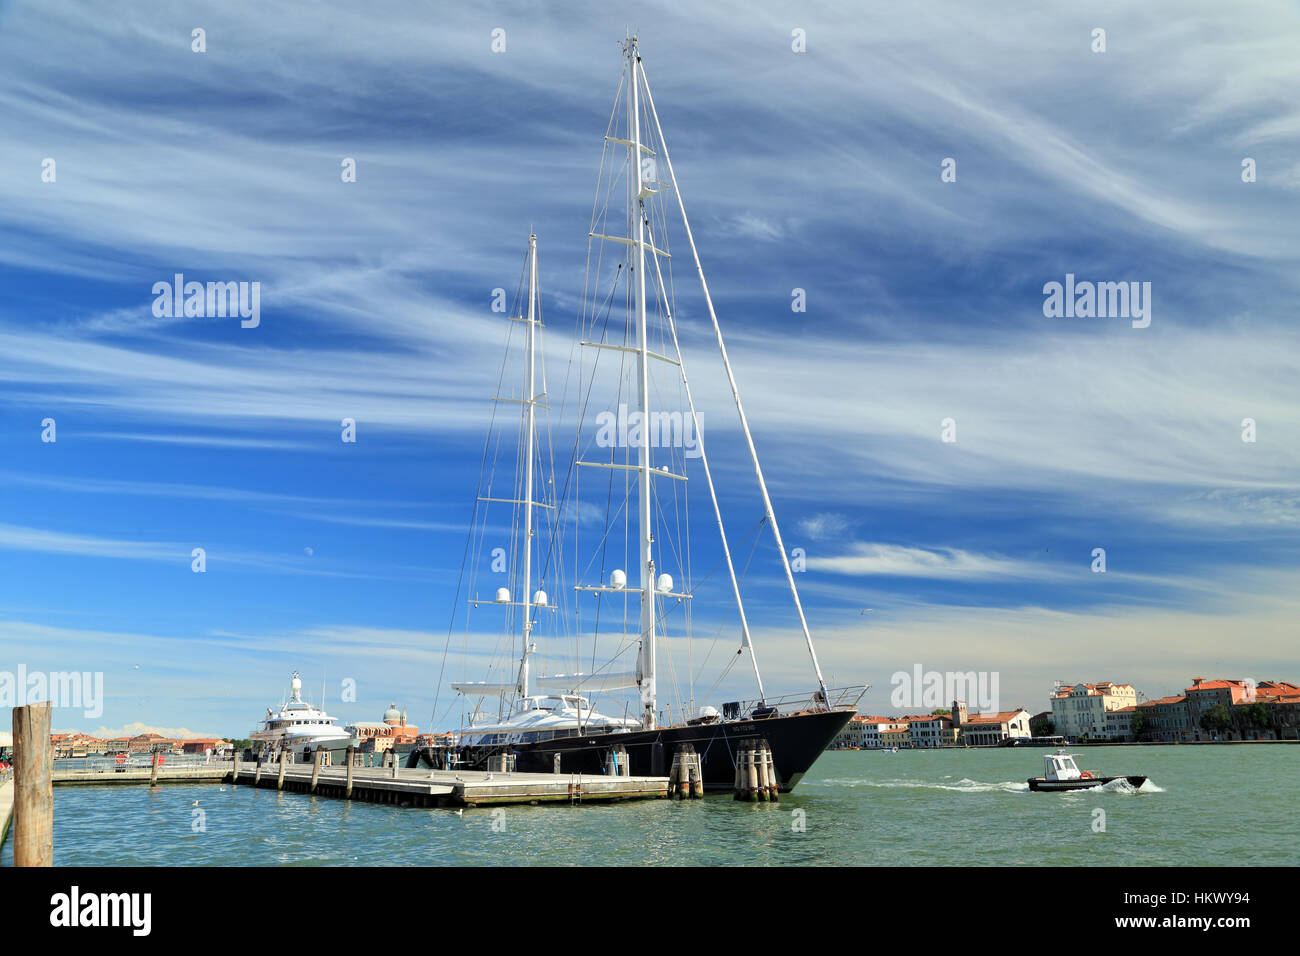 Sailing yacht Silvana, Cirrus clouds Stock Photo